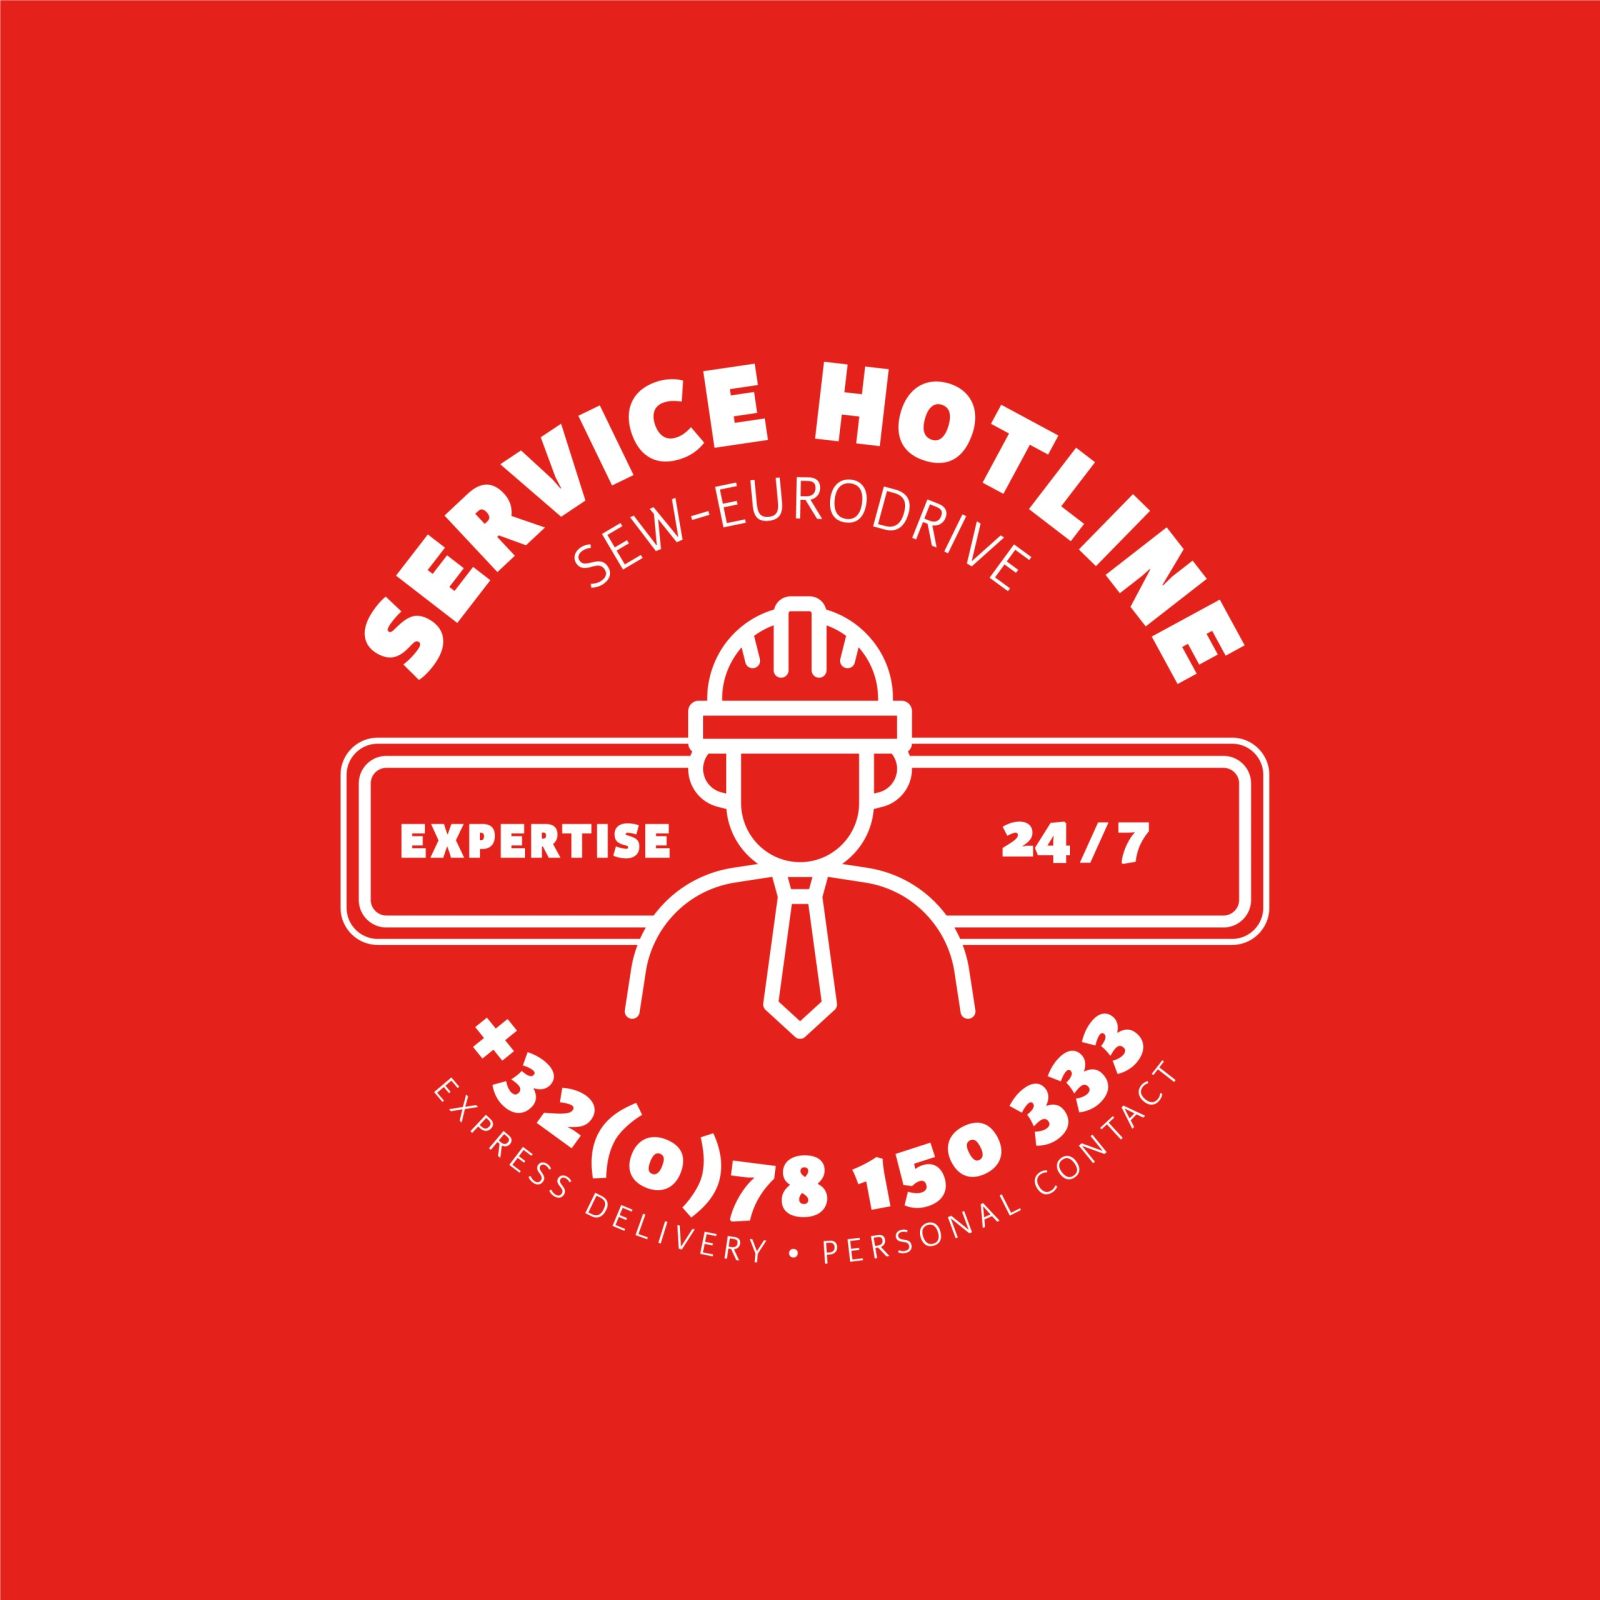 SEW-service-hotline